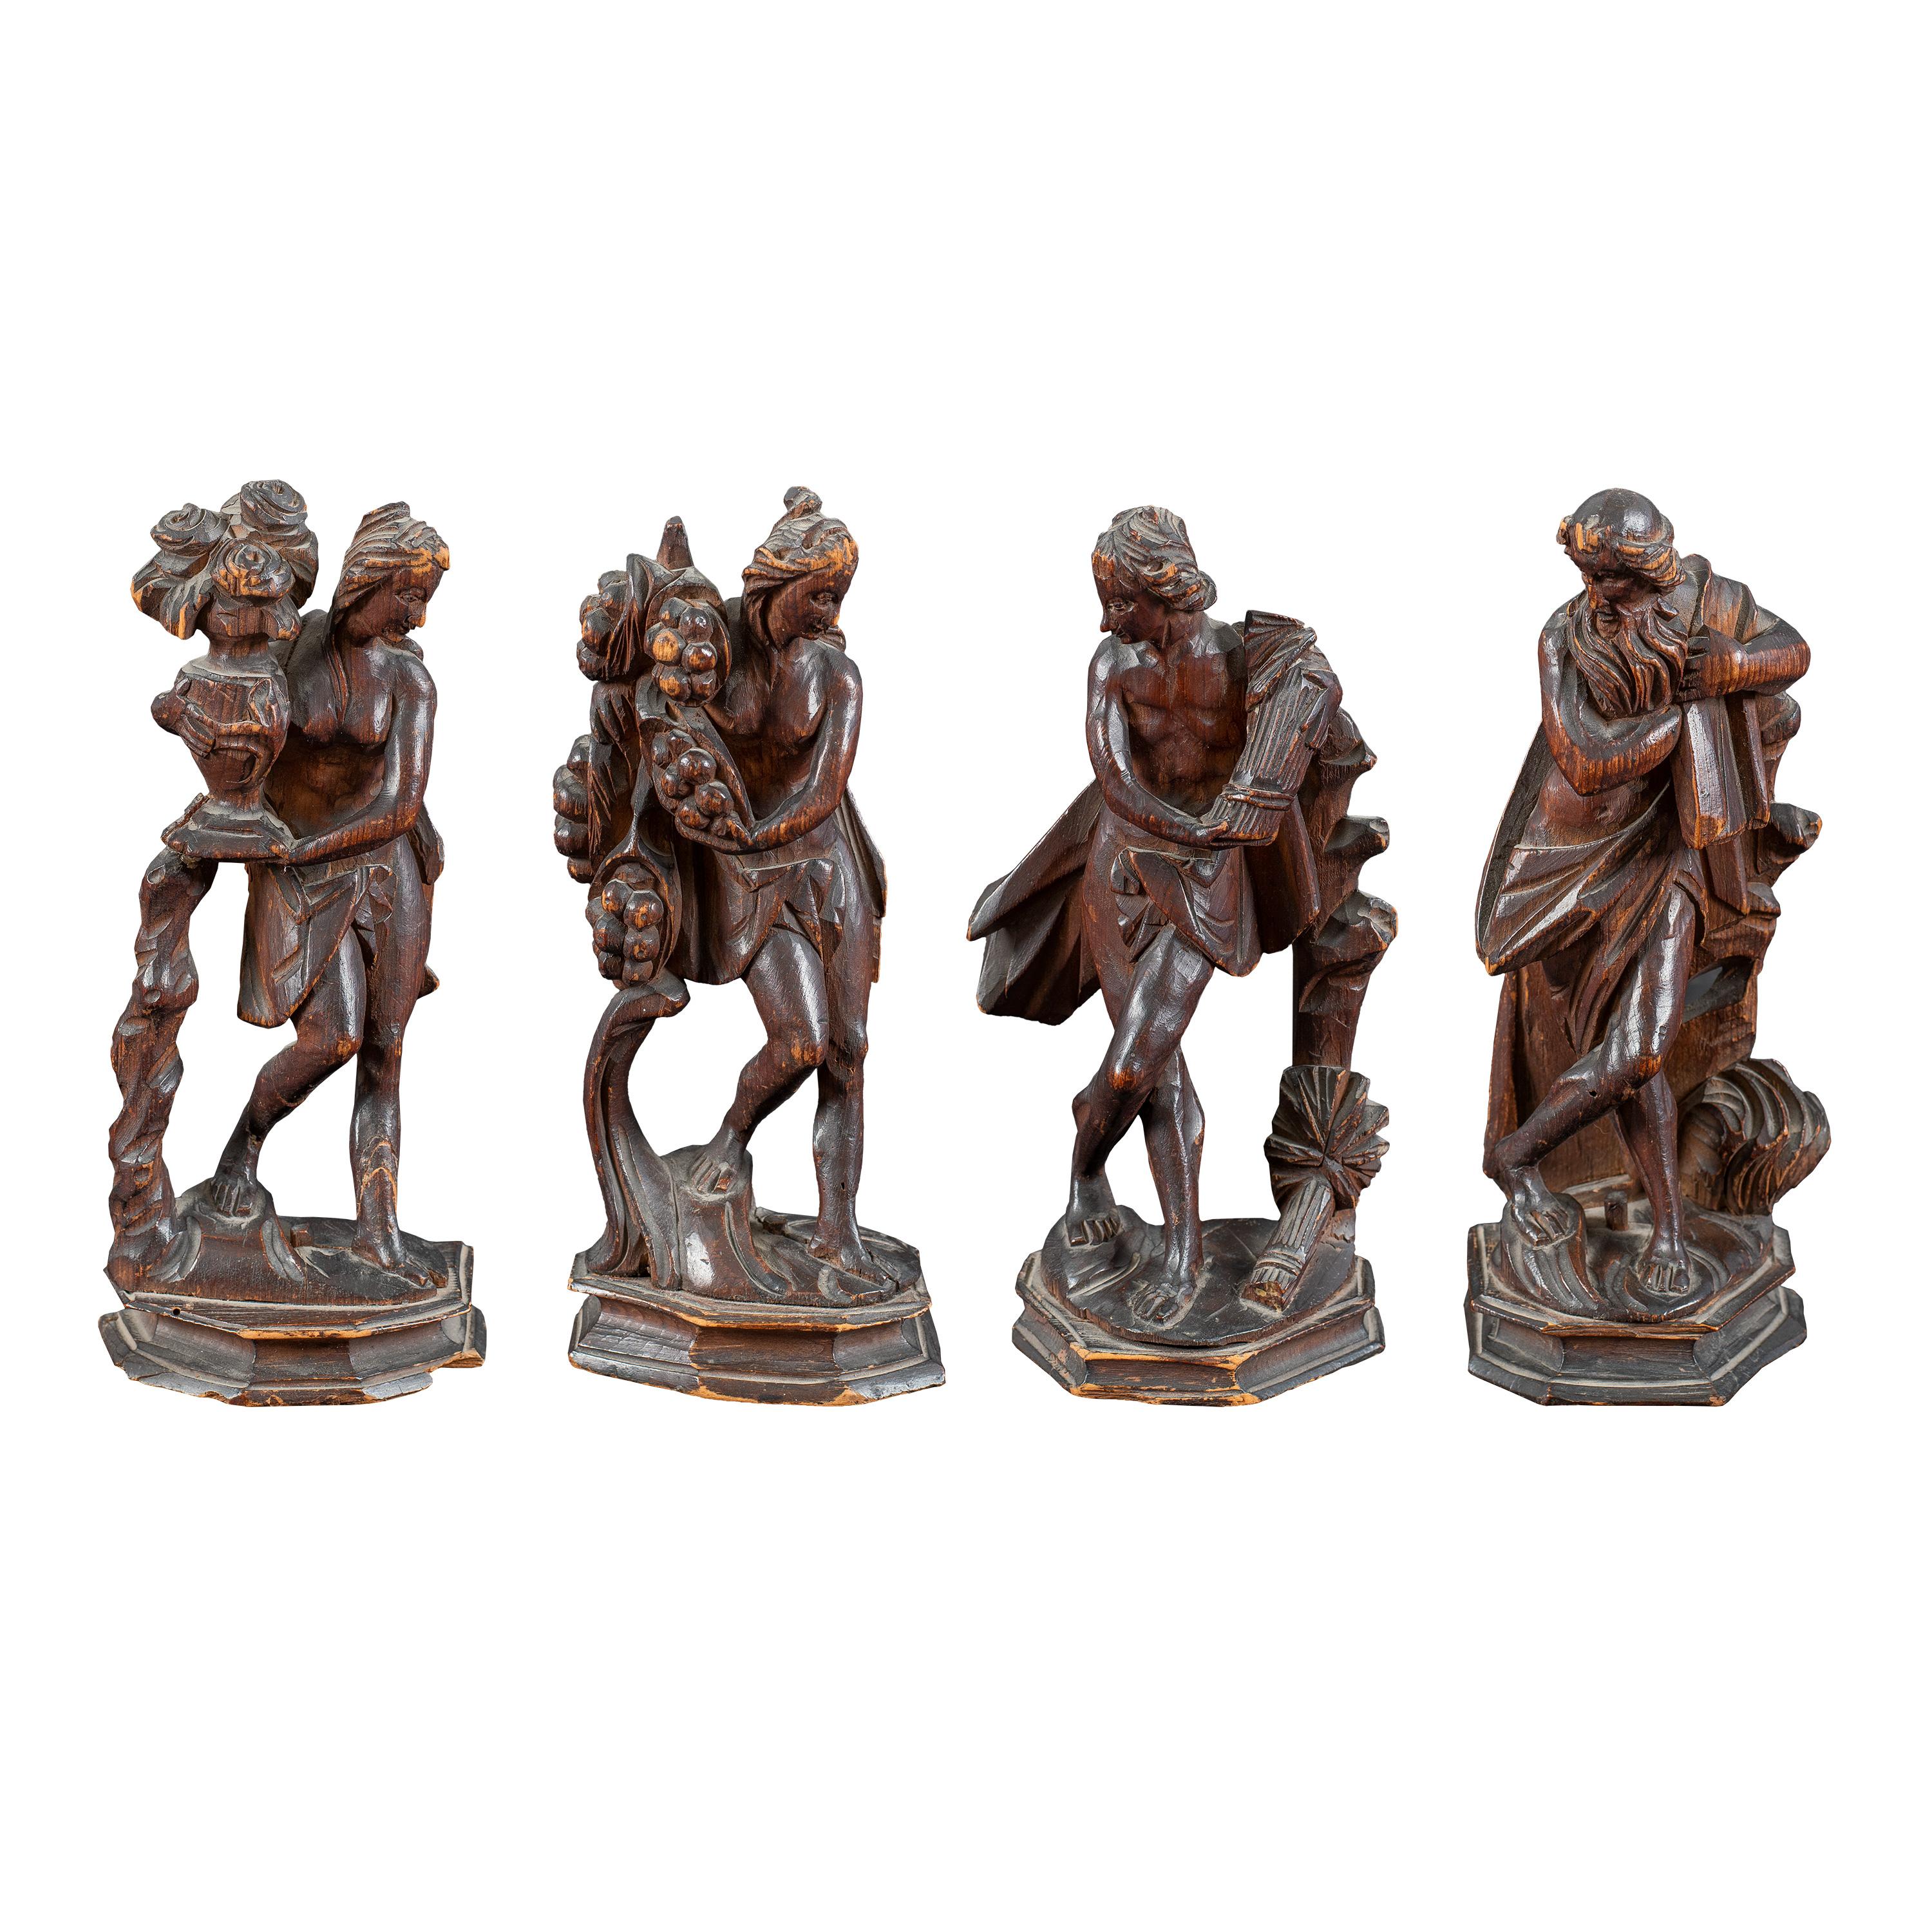 Unknown Figurative Sculpture - Rococò Venice - Set of four 18th century carved wood sculptures - Seasons